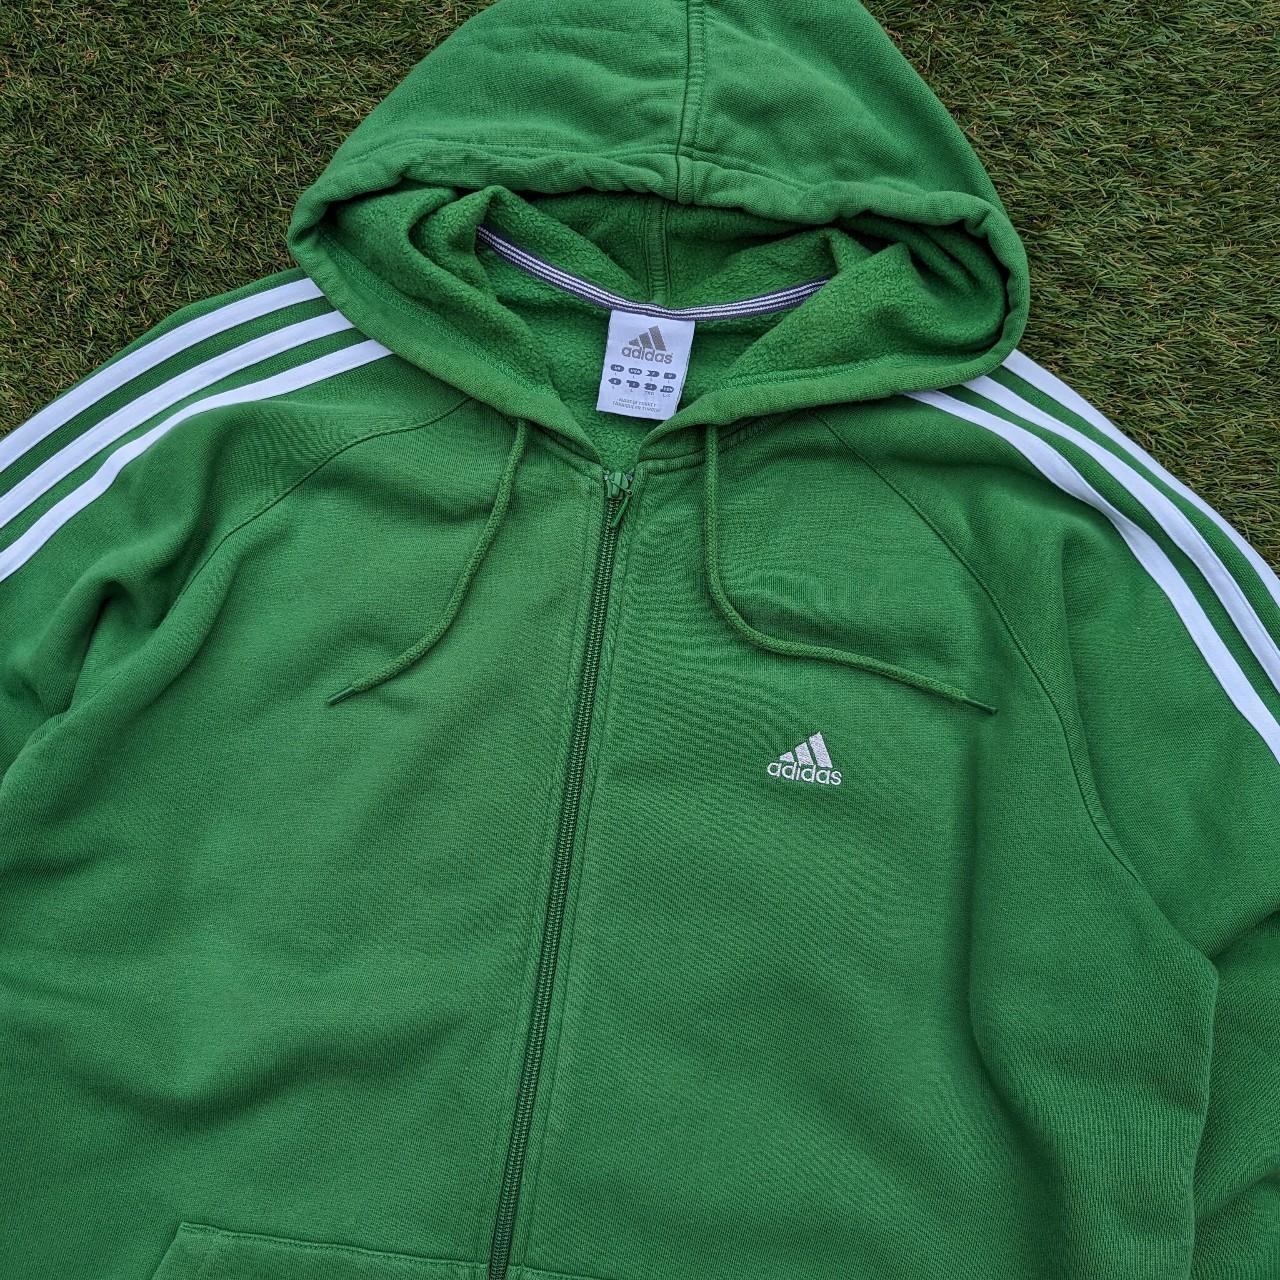 Adidas Men's White and Green Hoodie | Depop